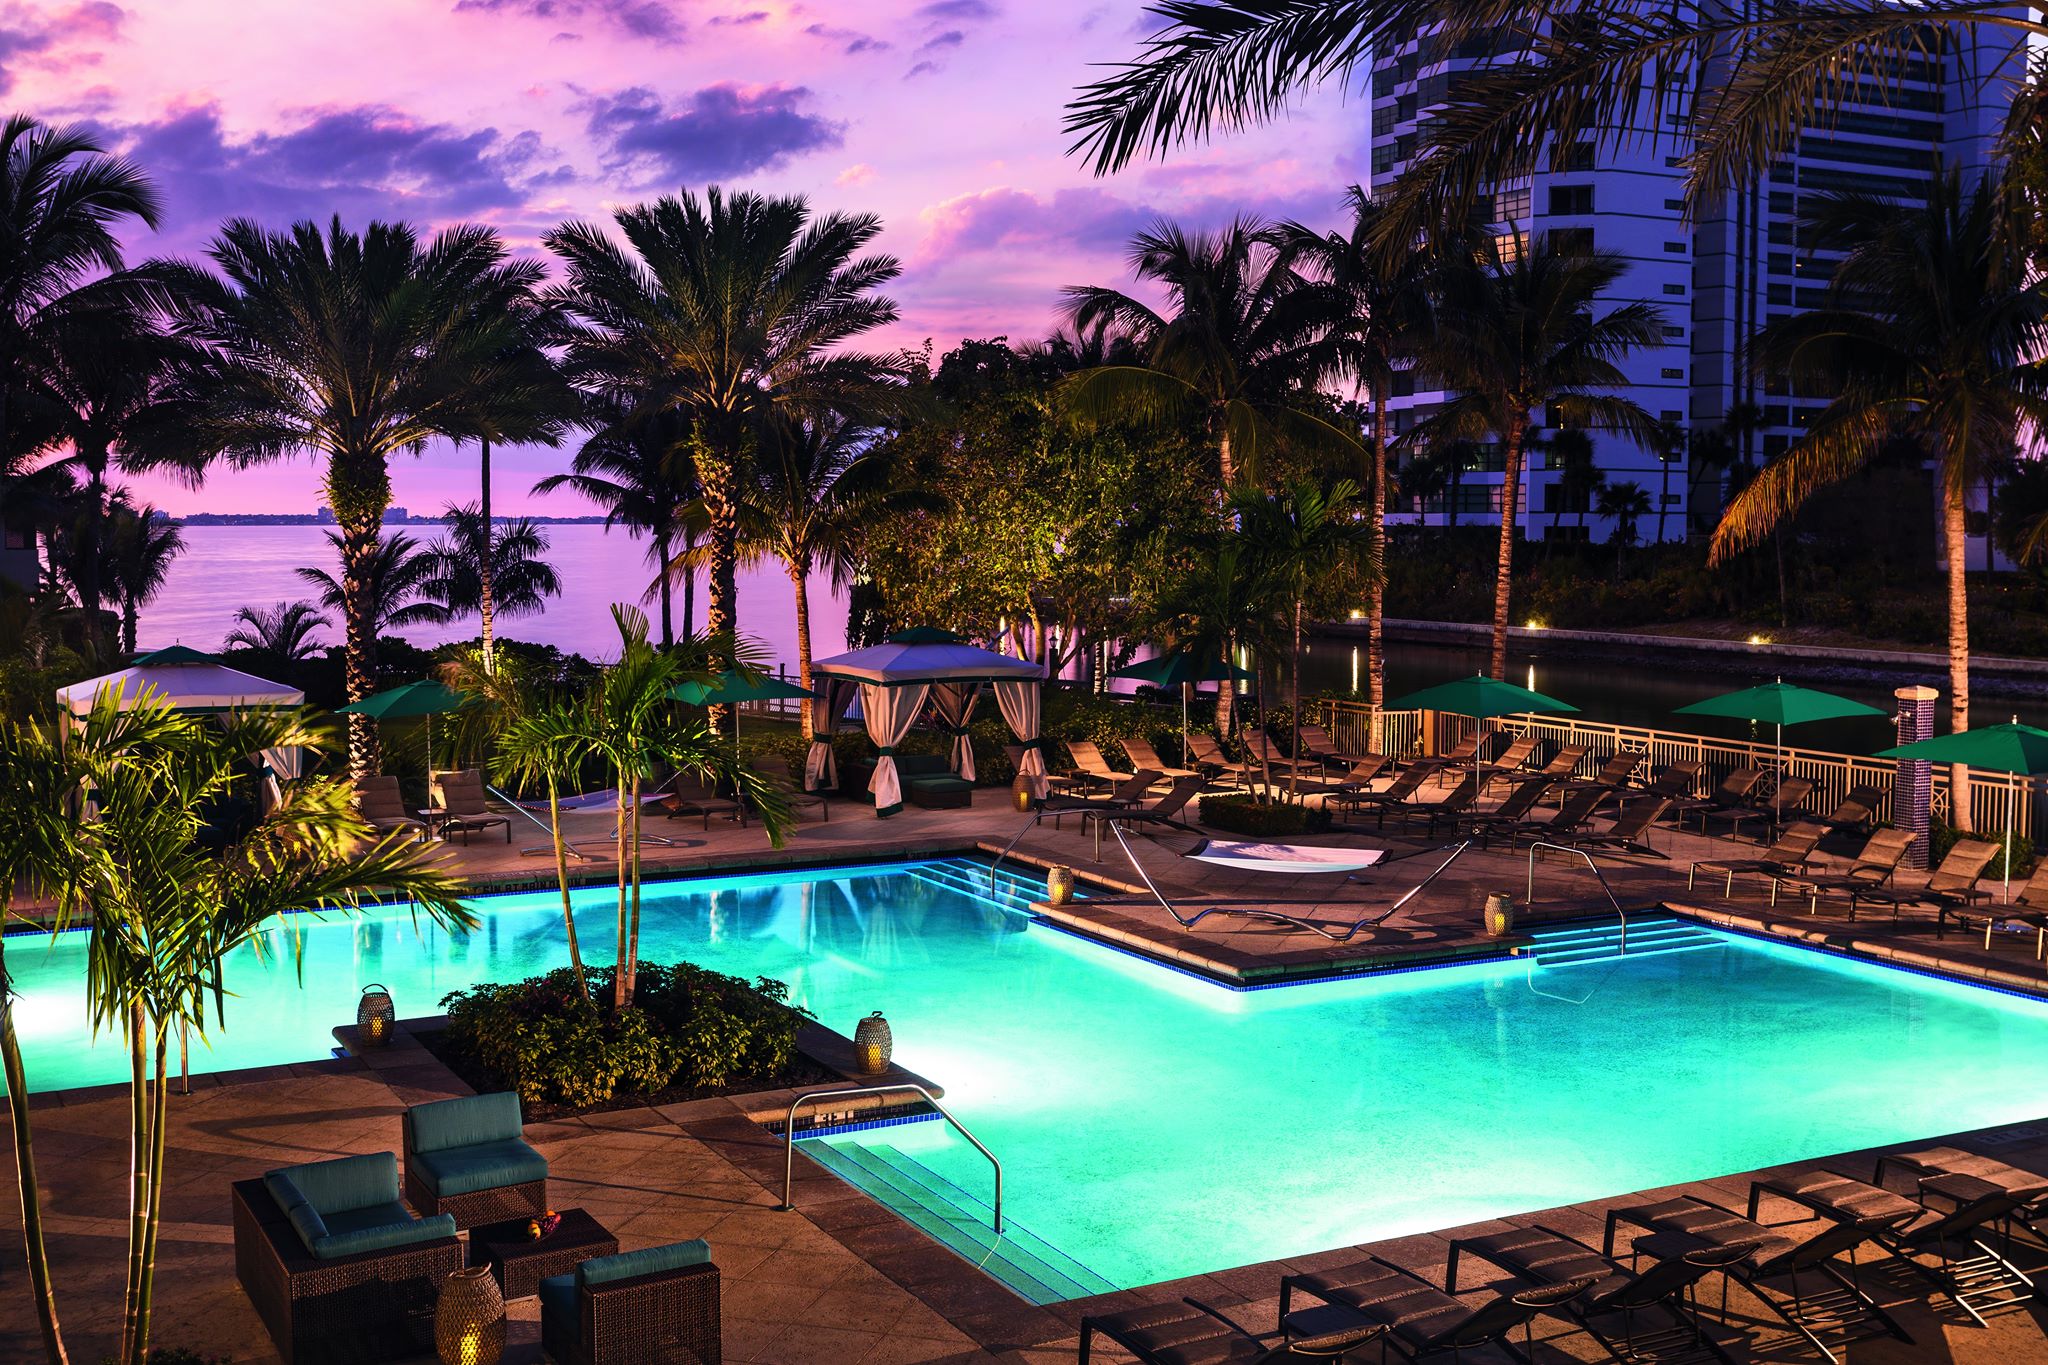 The Ritz-Carlton Sarasota in Florida